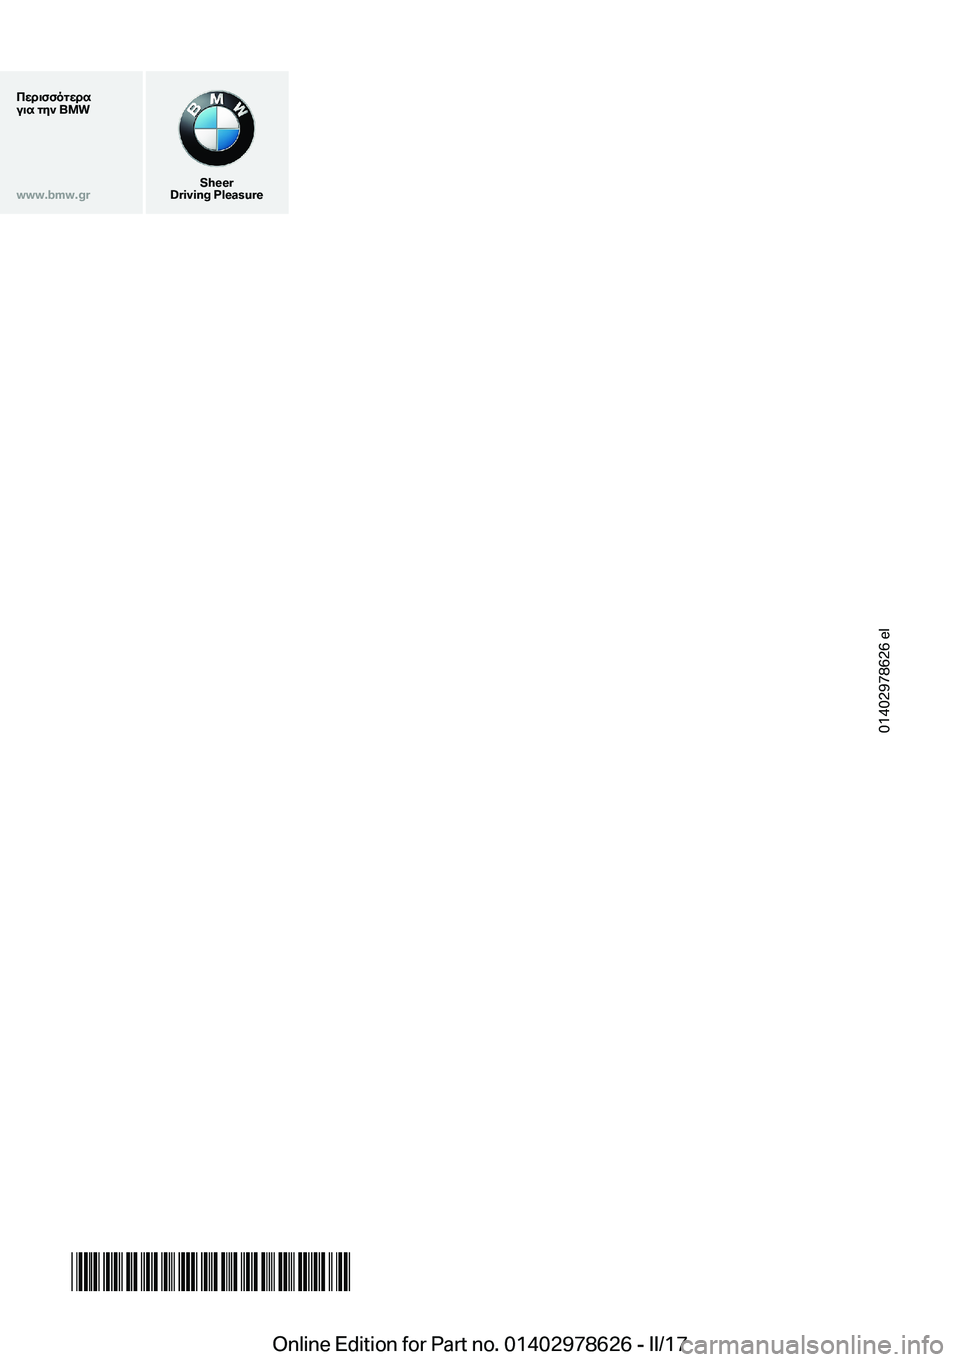 BMW 7 SERIES 2018  ΟΔΗΓΌΣ ΧΡΉΣΗΣ (in Greek) cwd\ffogwds
u\s�gy`��B�M�W�w�w�w�.�b�m�w�.�g�r
�S�h�e�e�r
�D�r�i�v�i�n�g��P�l�e�a�s�u�r�e
�0�1�4�0�2�9�7�8�6�2�6� �e�l
���!��9�7�8�6��6���(��O�n�l�i�n�e� �E�d�i�t�i�o�n� �f�